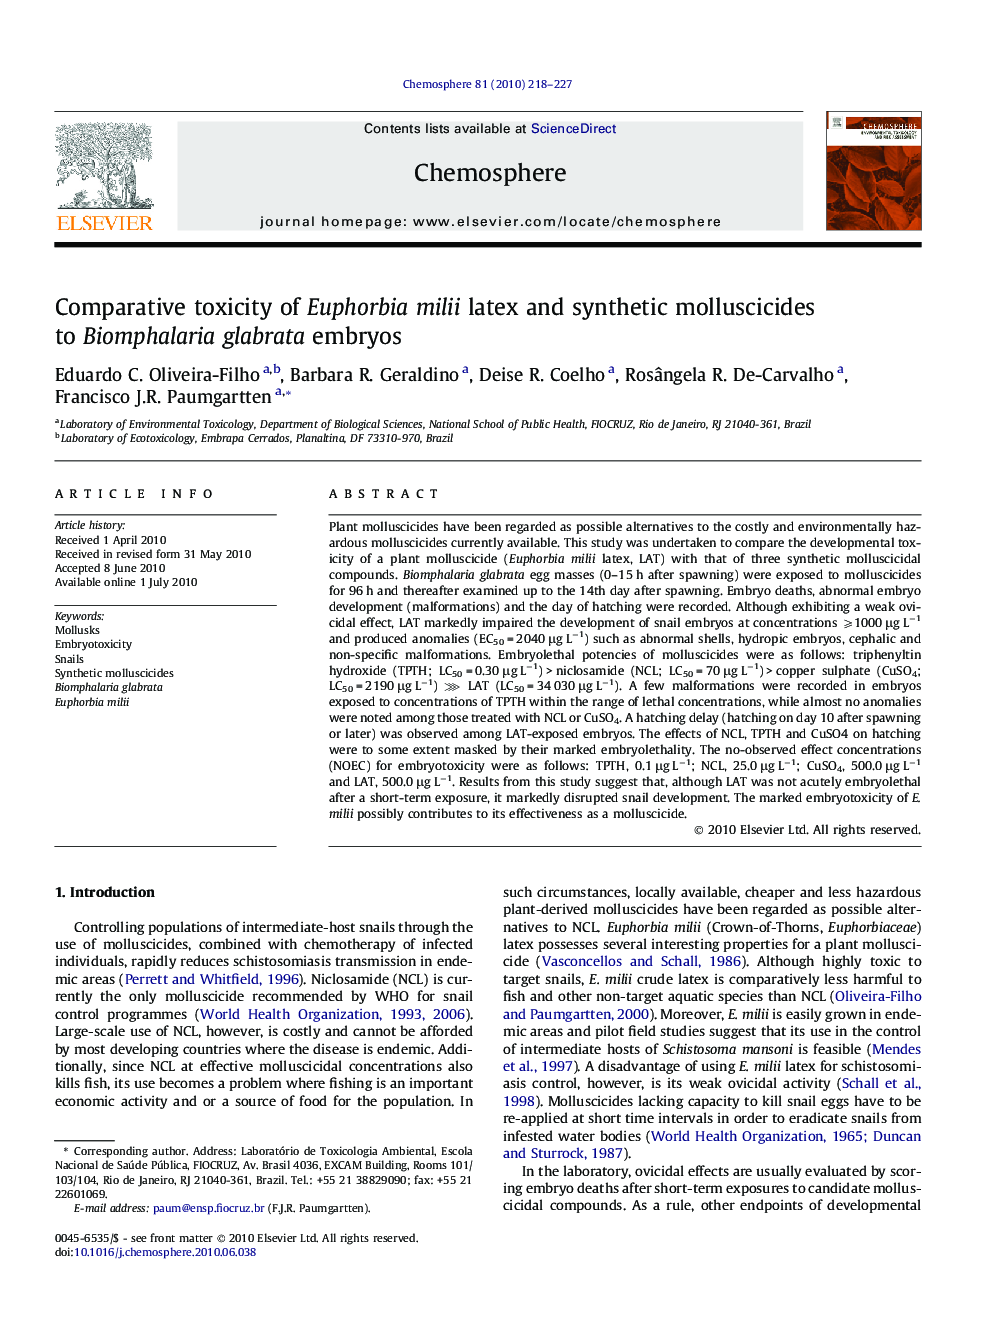 Comparative toxicity of Euphorbia milii latex and synthetic molluscicides to Biomphalaria glabrata embryos